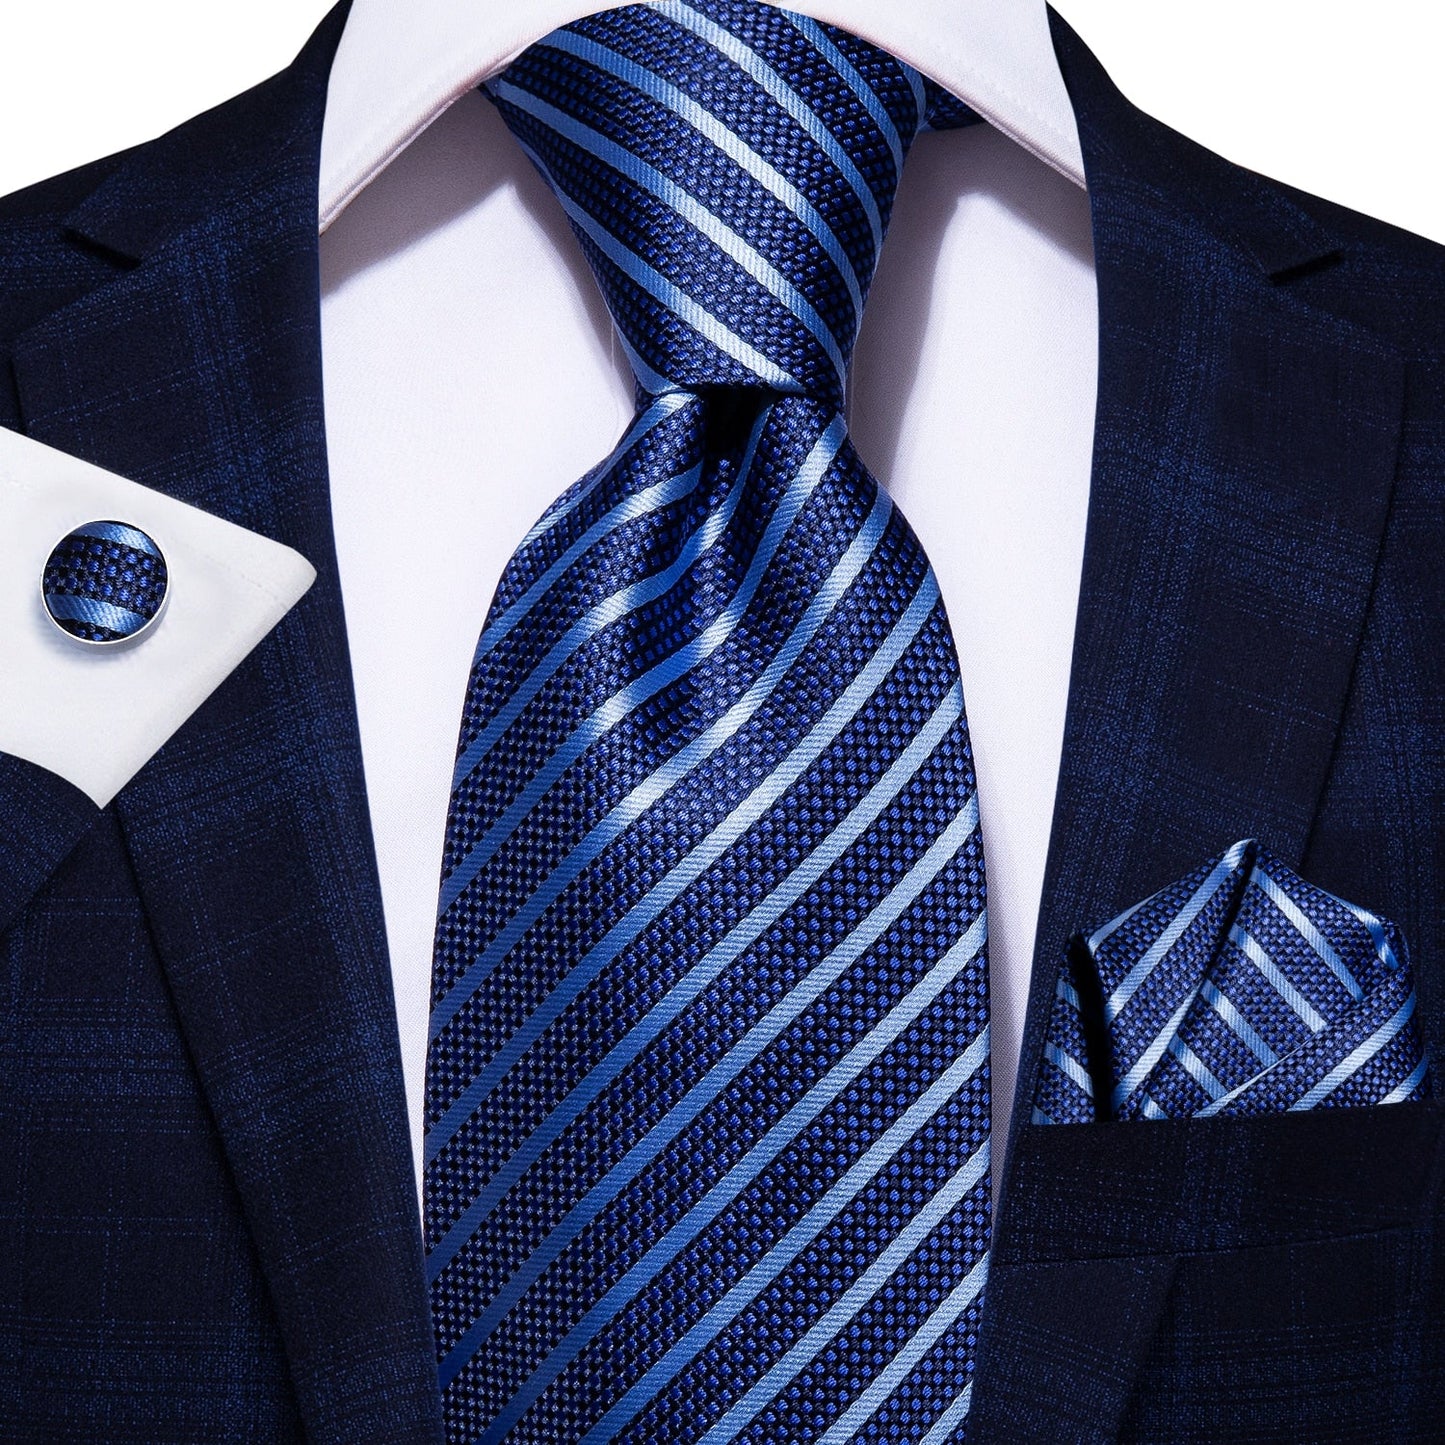 3 Piece Business Classic Blue Black Striped Solid Men's 3.4" Brand Necktie Pocket Square Cufflinks Wedding Party Silk Tie Set - The Clothing Company Sydney